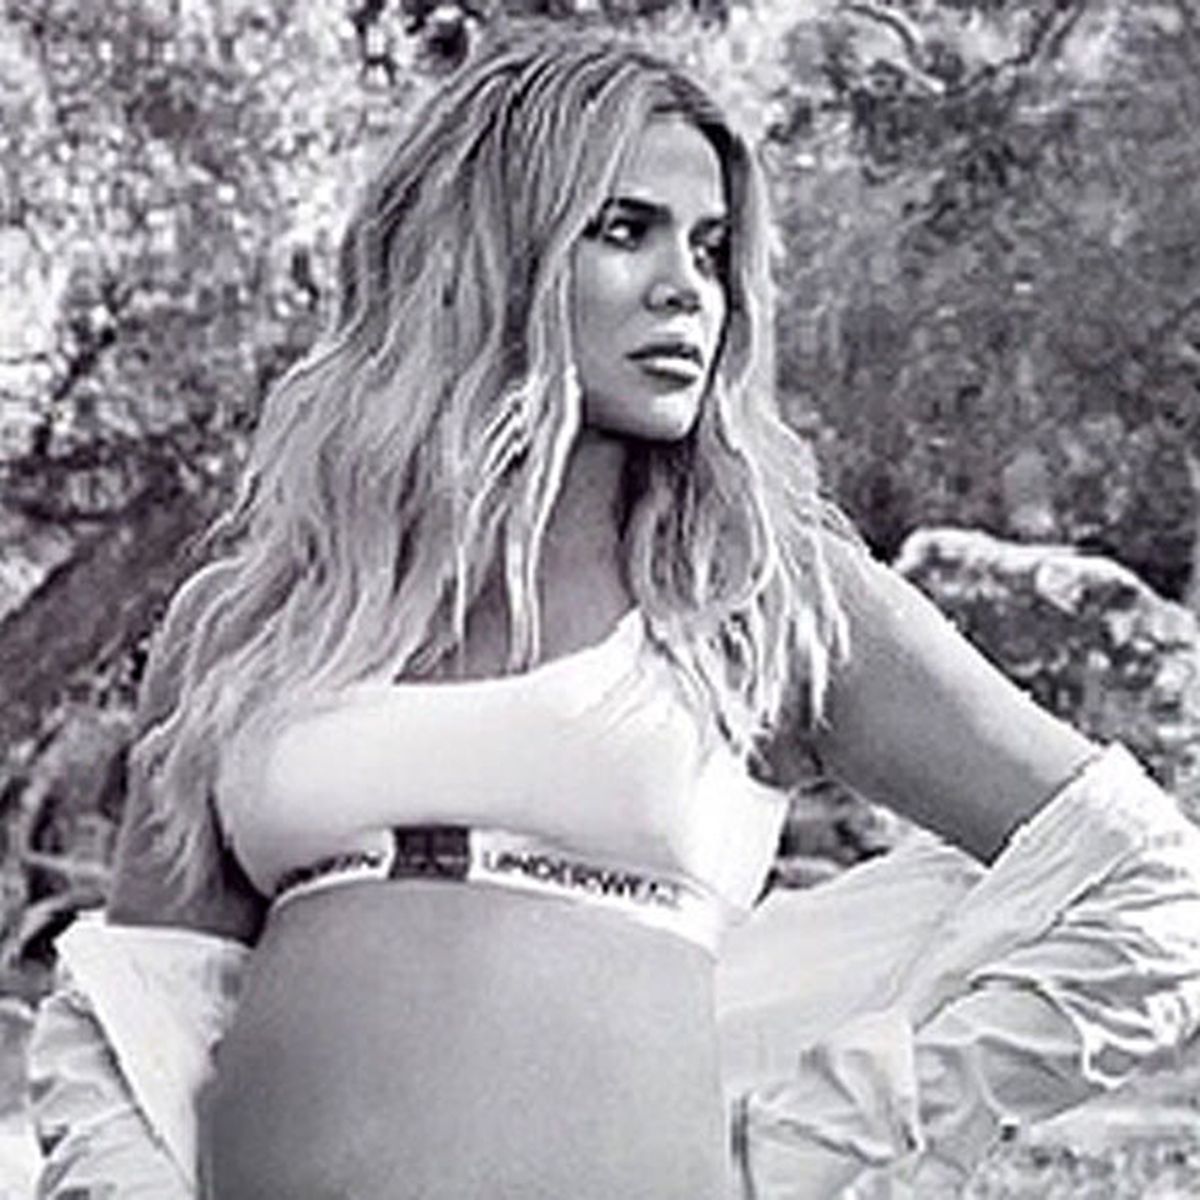 The Reason Khloé Kardashian Wore Calvin Klein Bra in Pregnancy Reveal